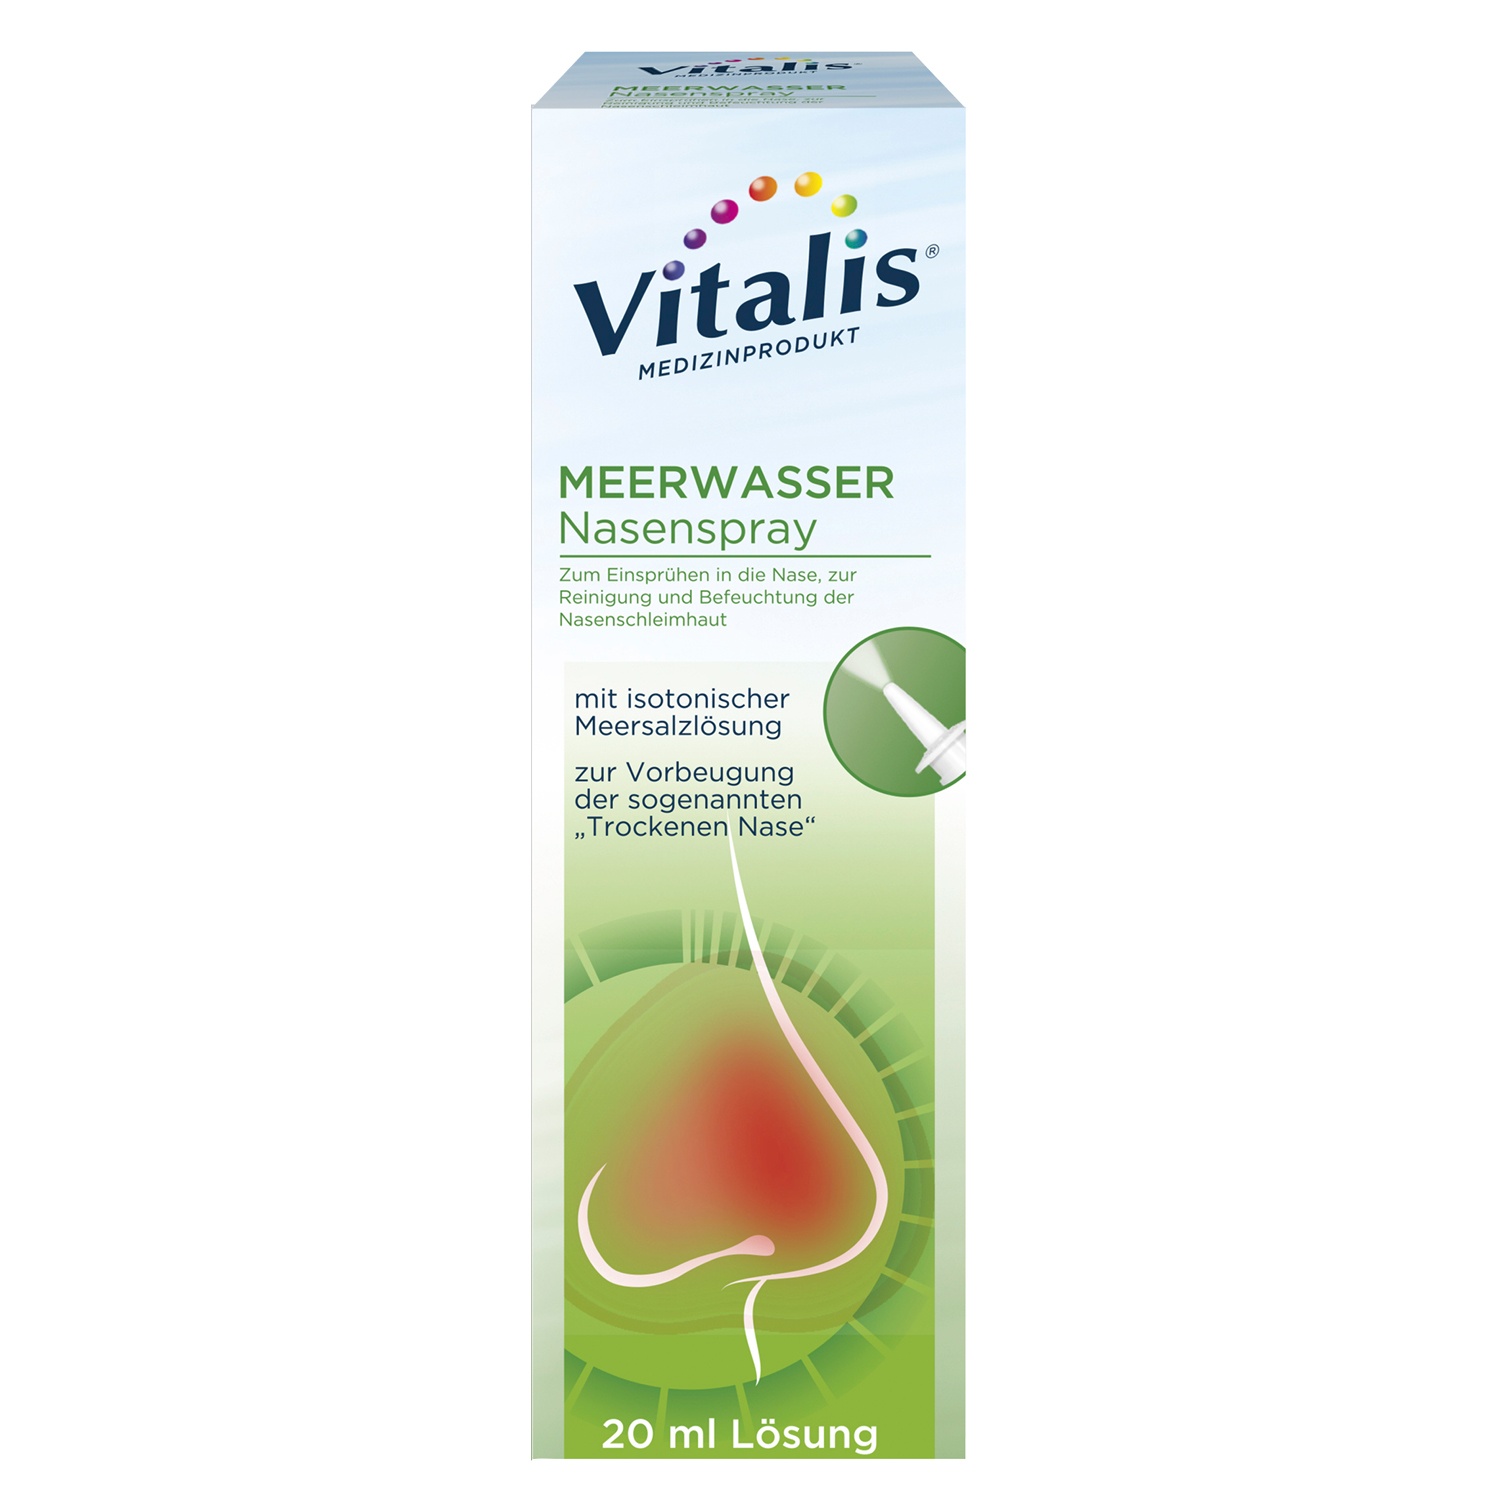 Vitalis® Meerwasser Nasenspray